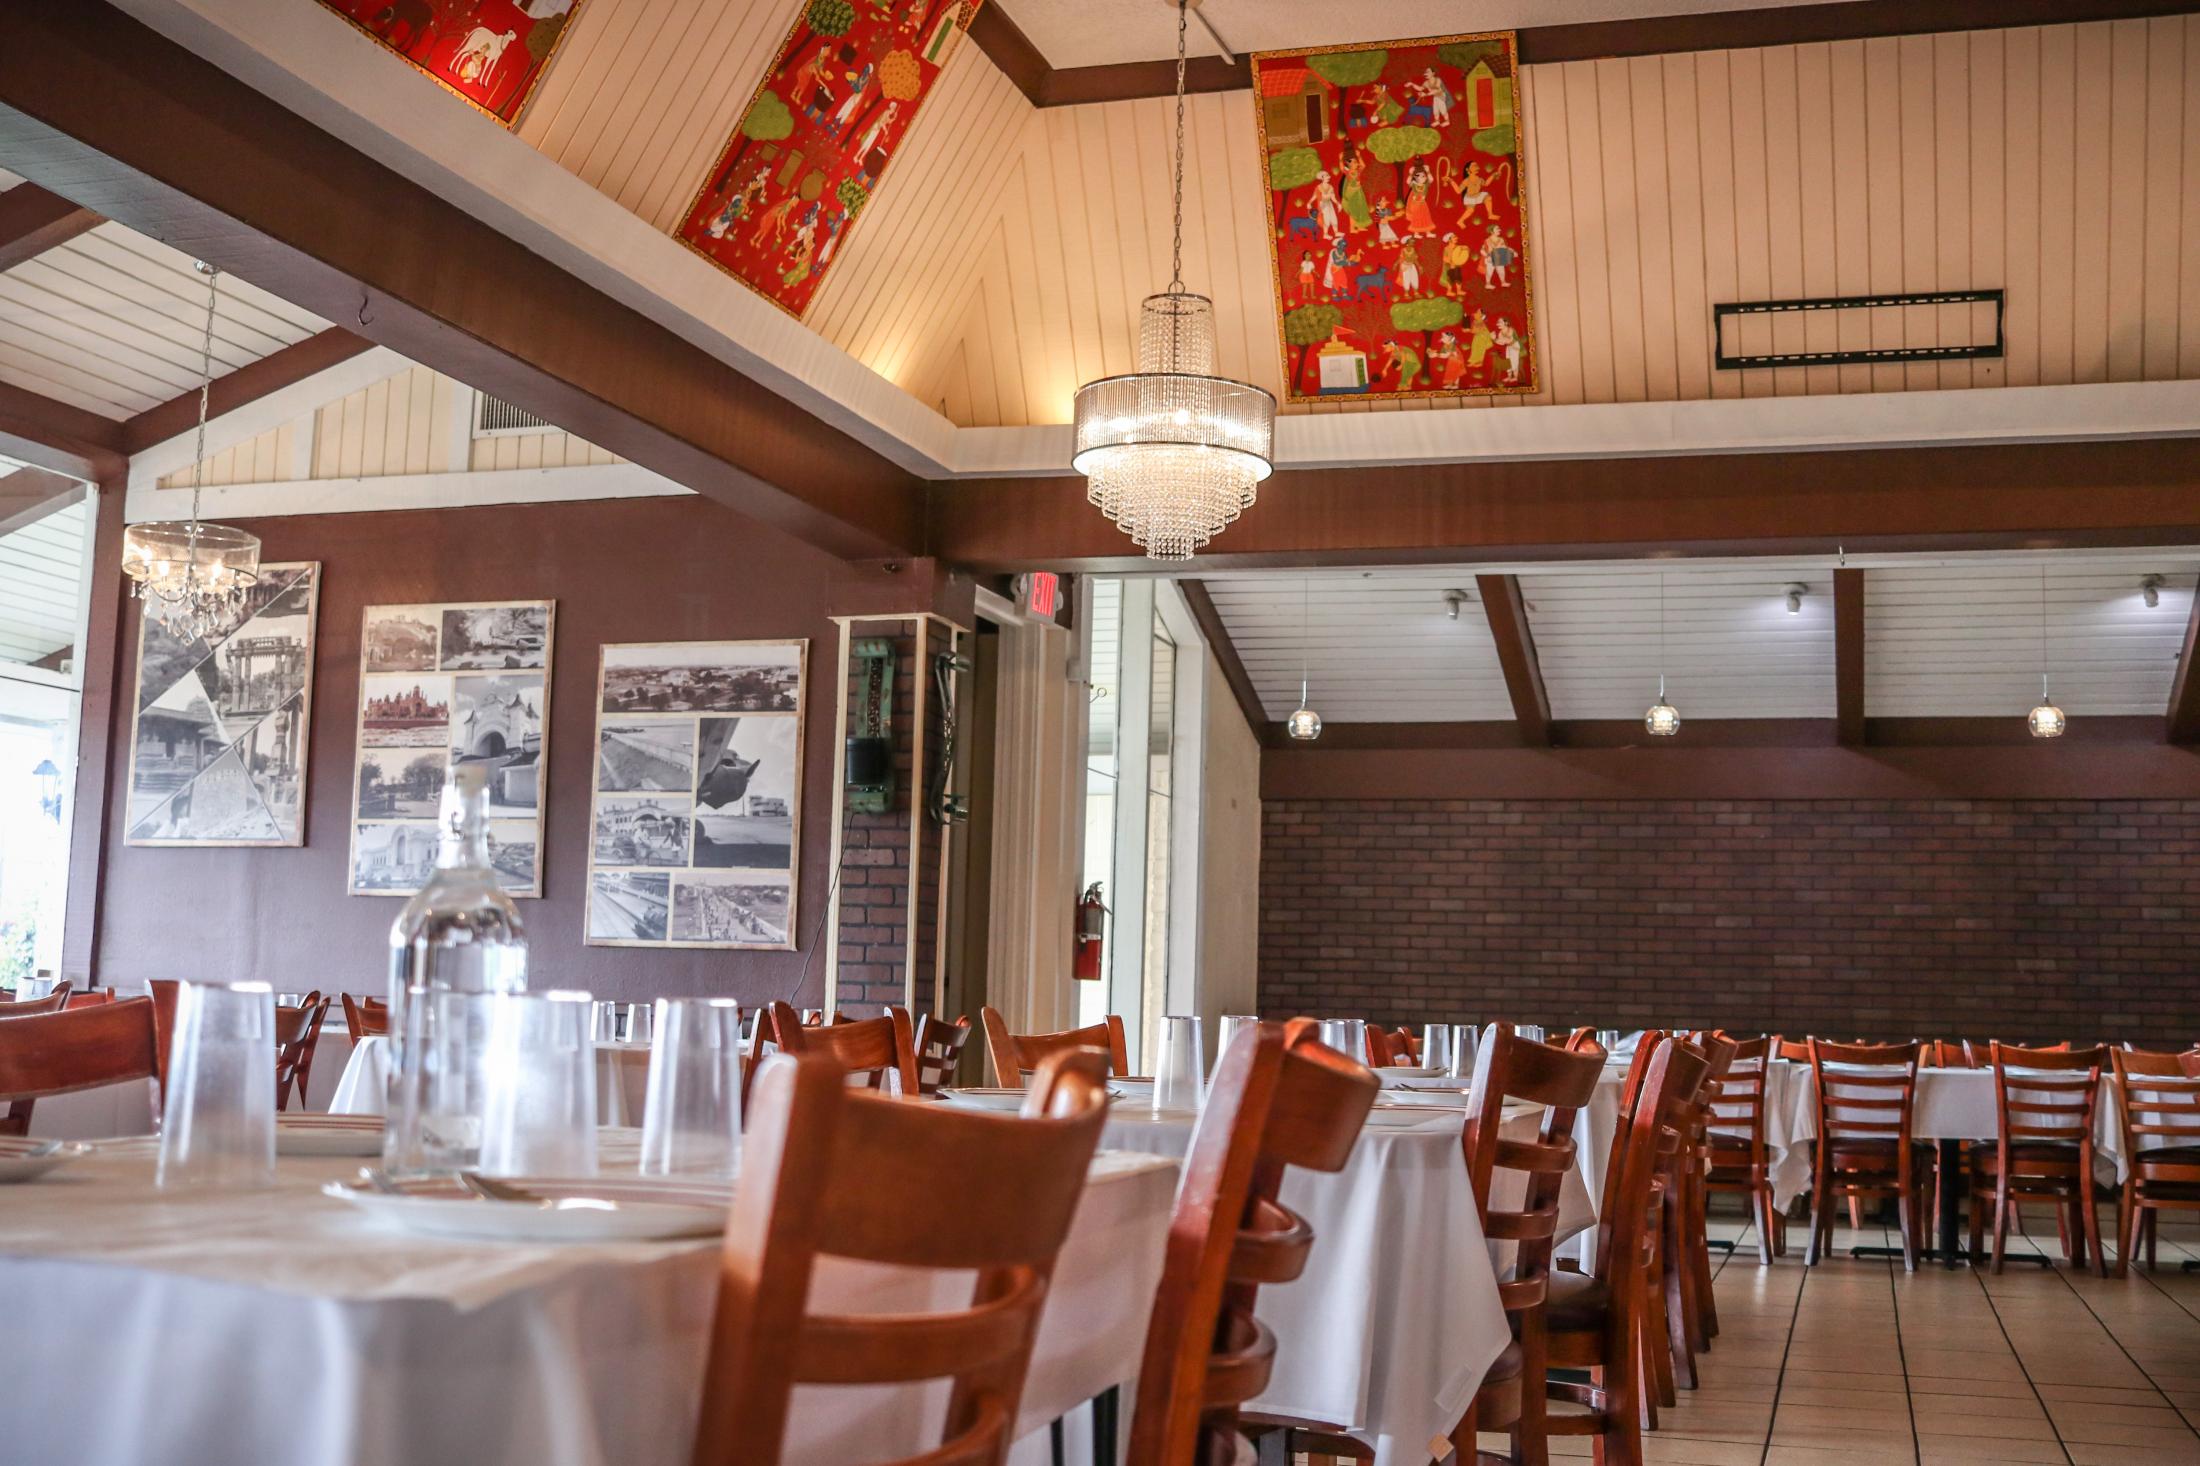 Indian Food - Interior of Palamuru Grill in Santa Clara, Calif., on...